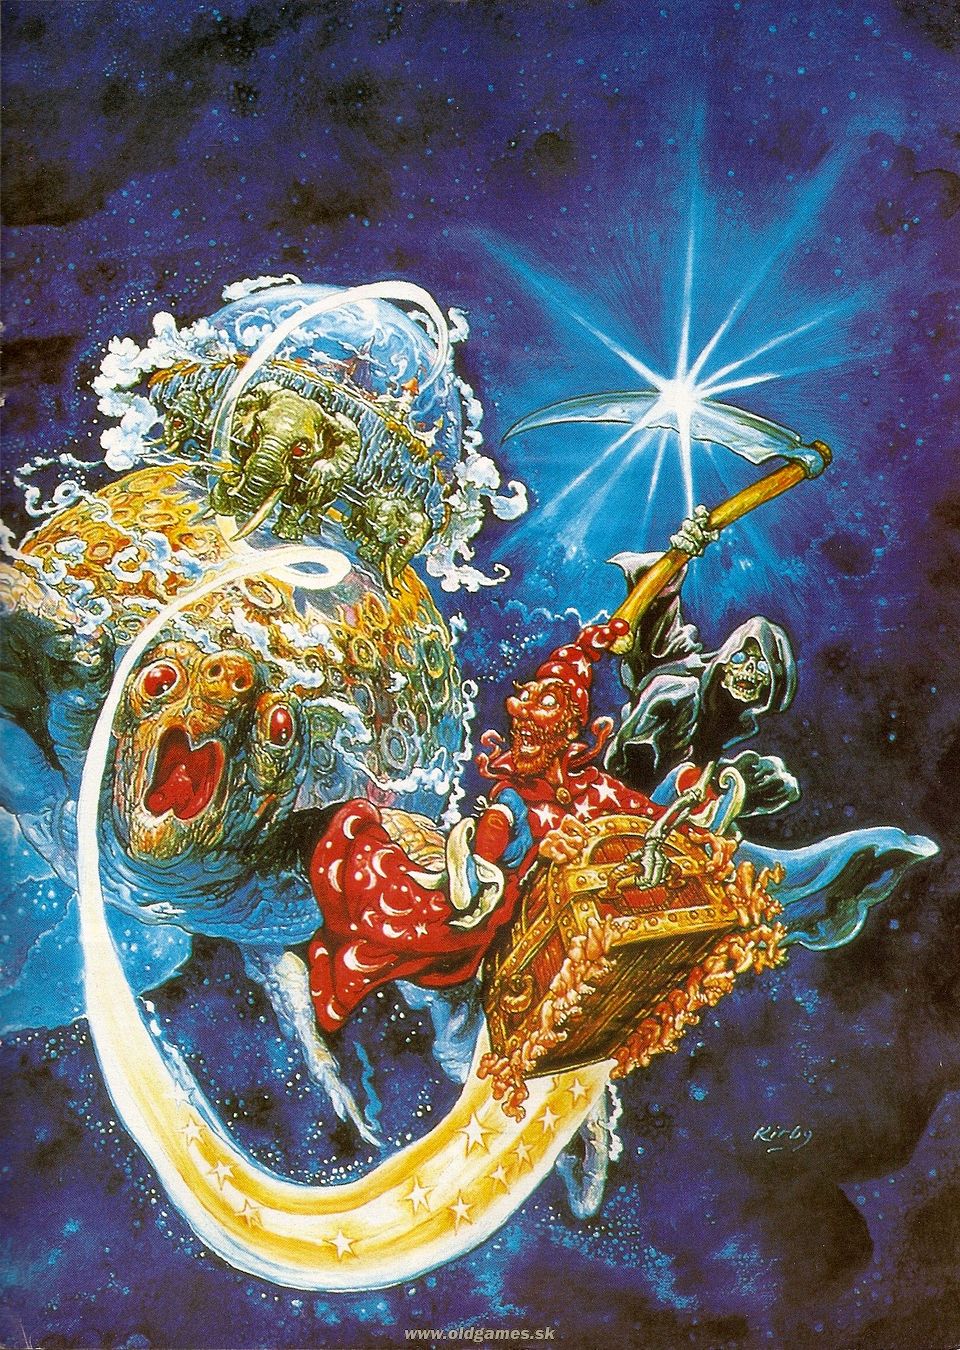 Poster: Terry Pratchett's Discworld